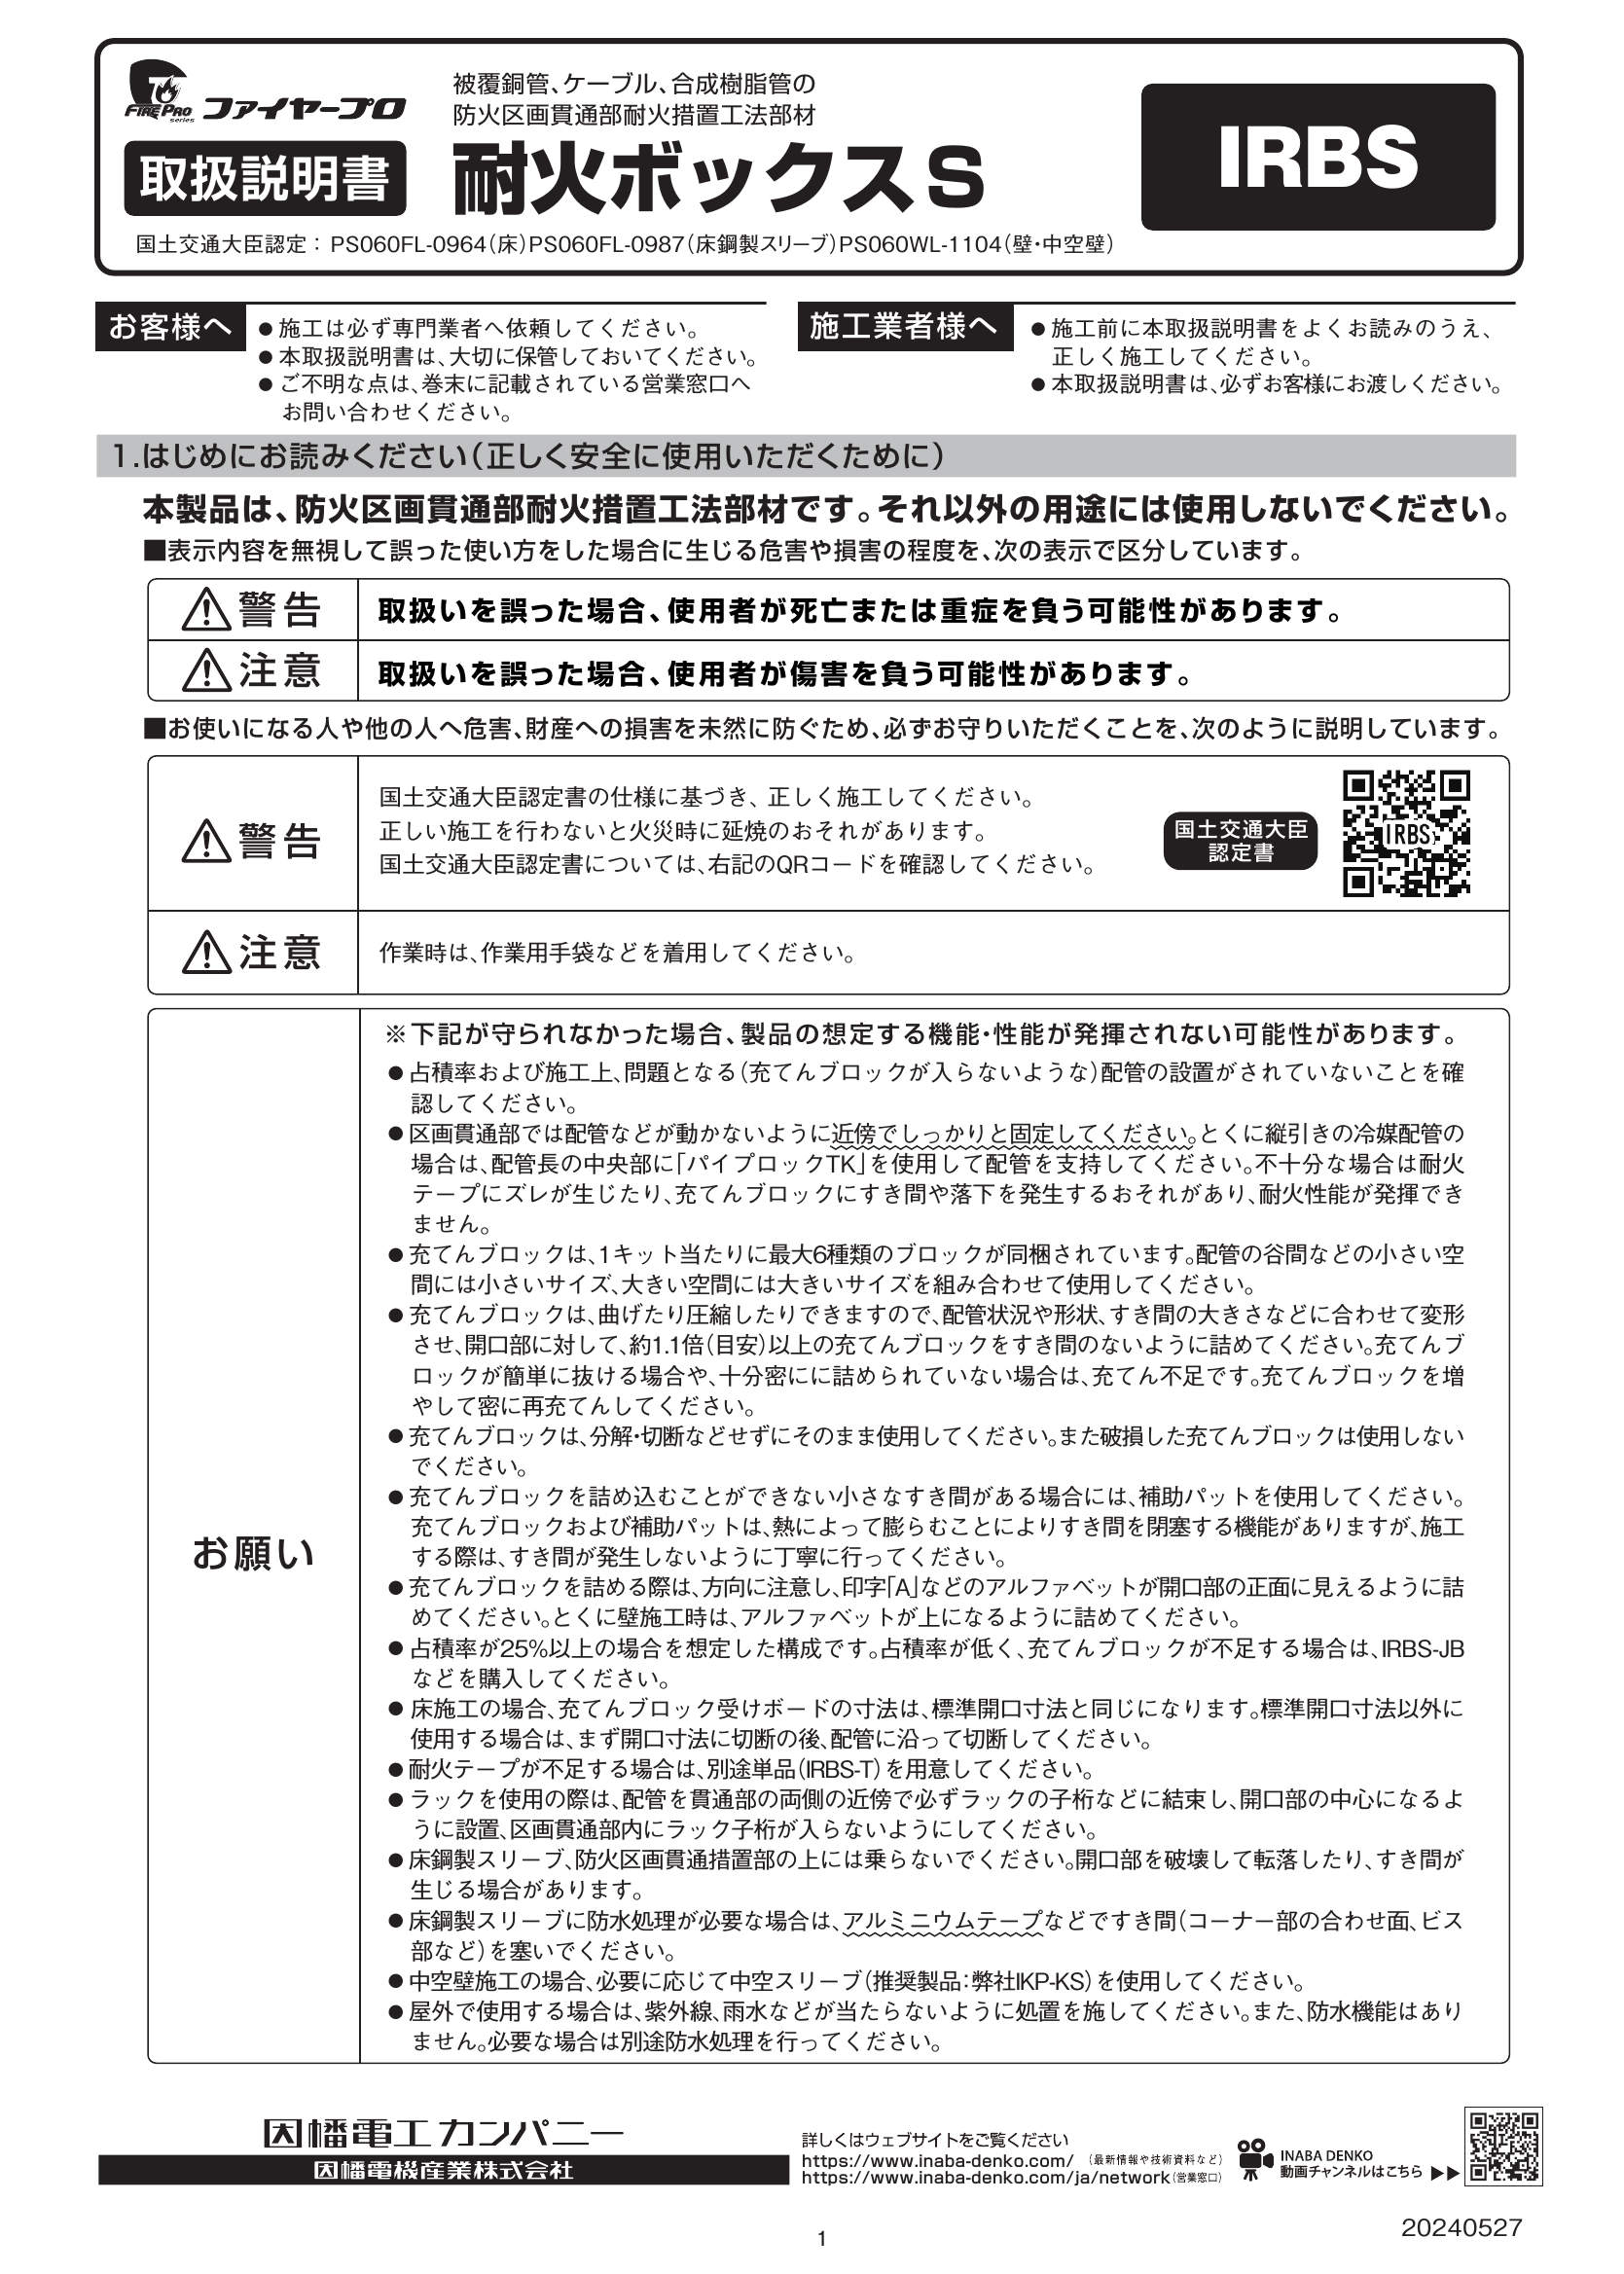 IRBS_取扱説明書_20240527-00w.pdf